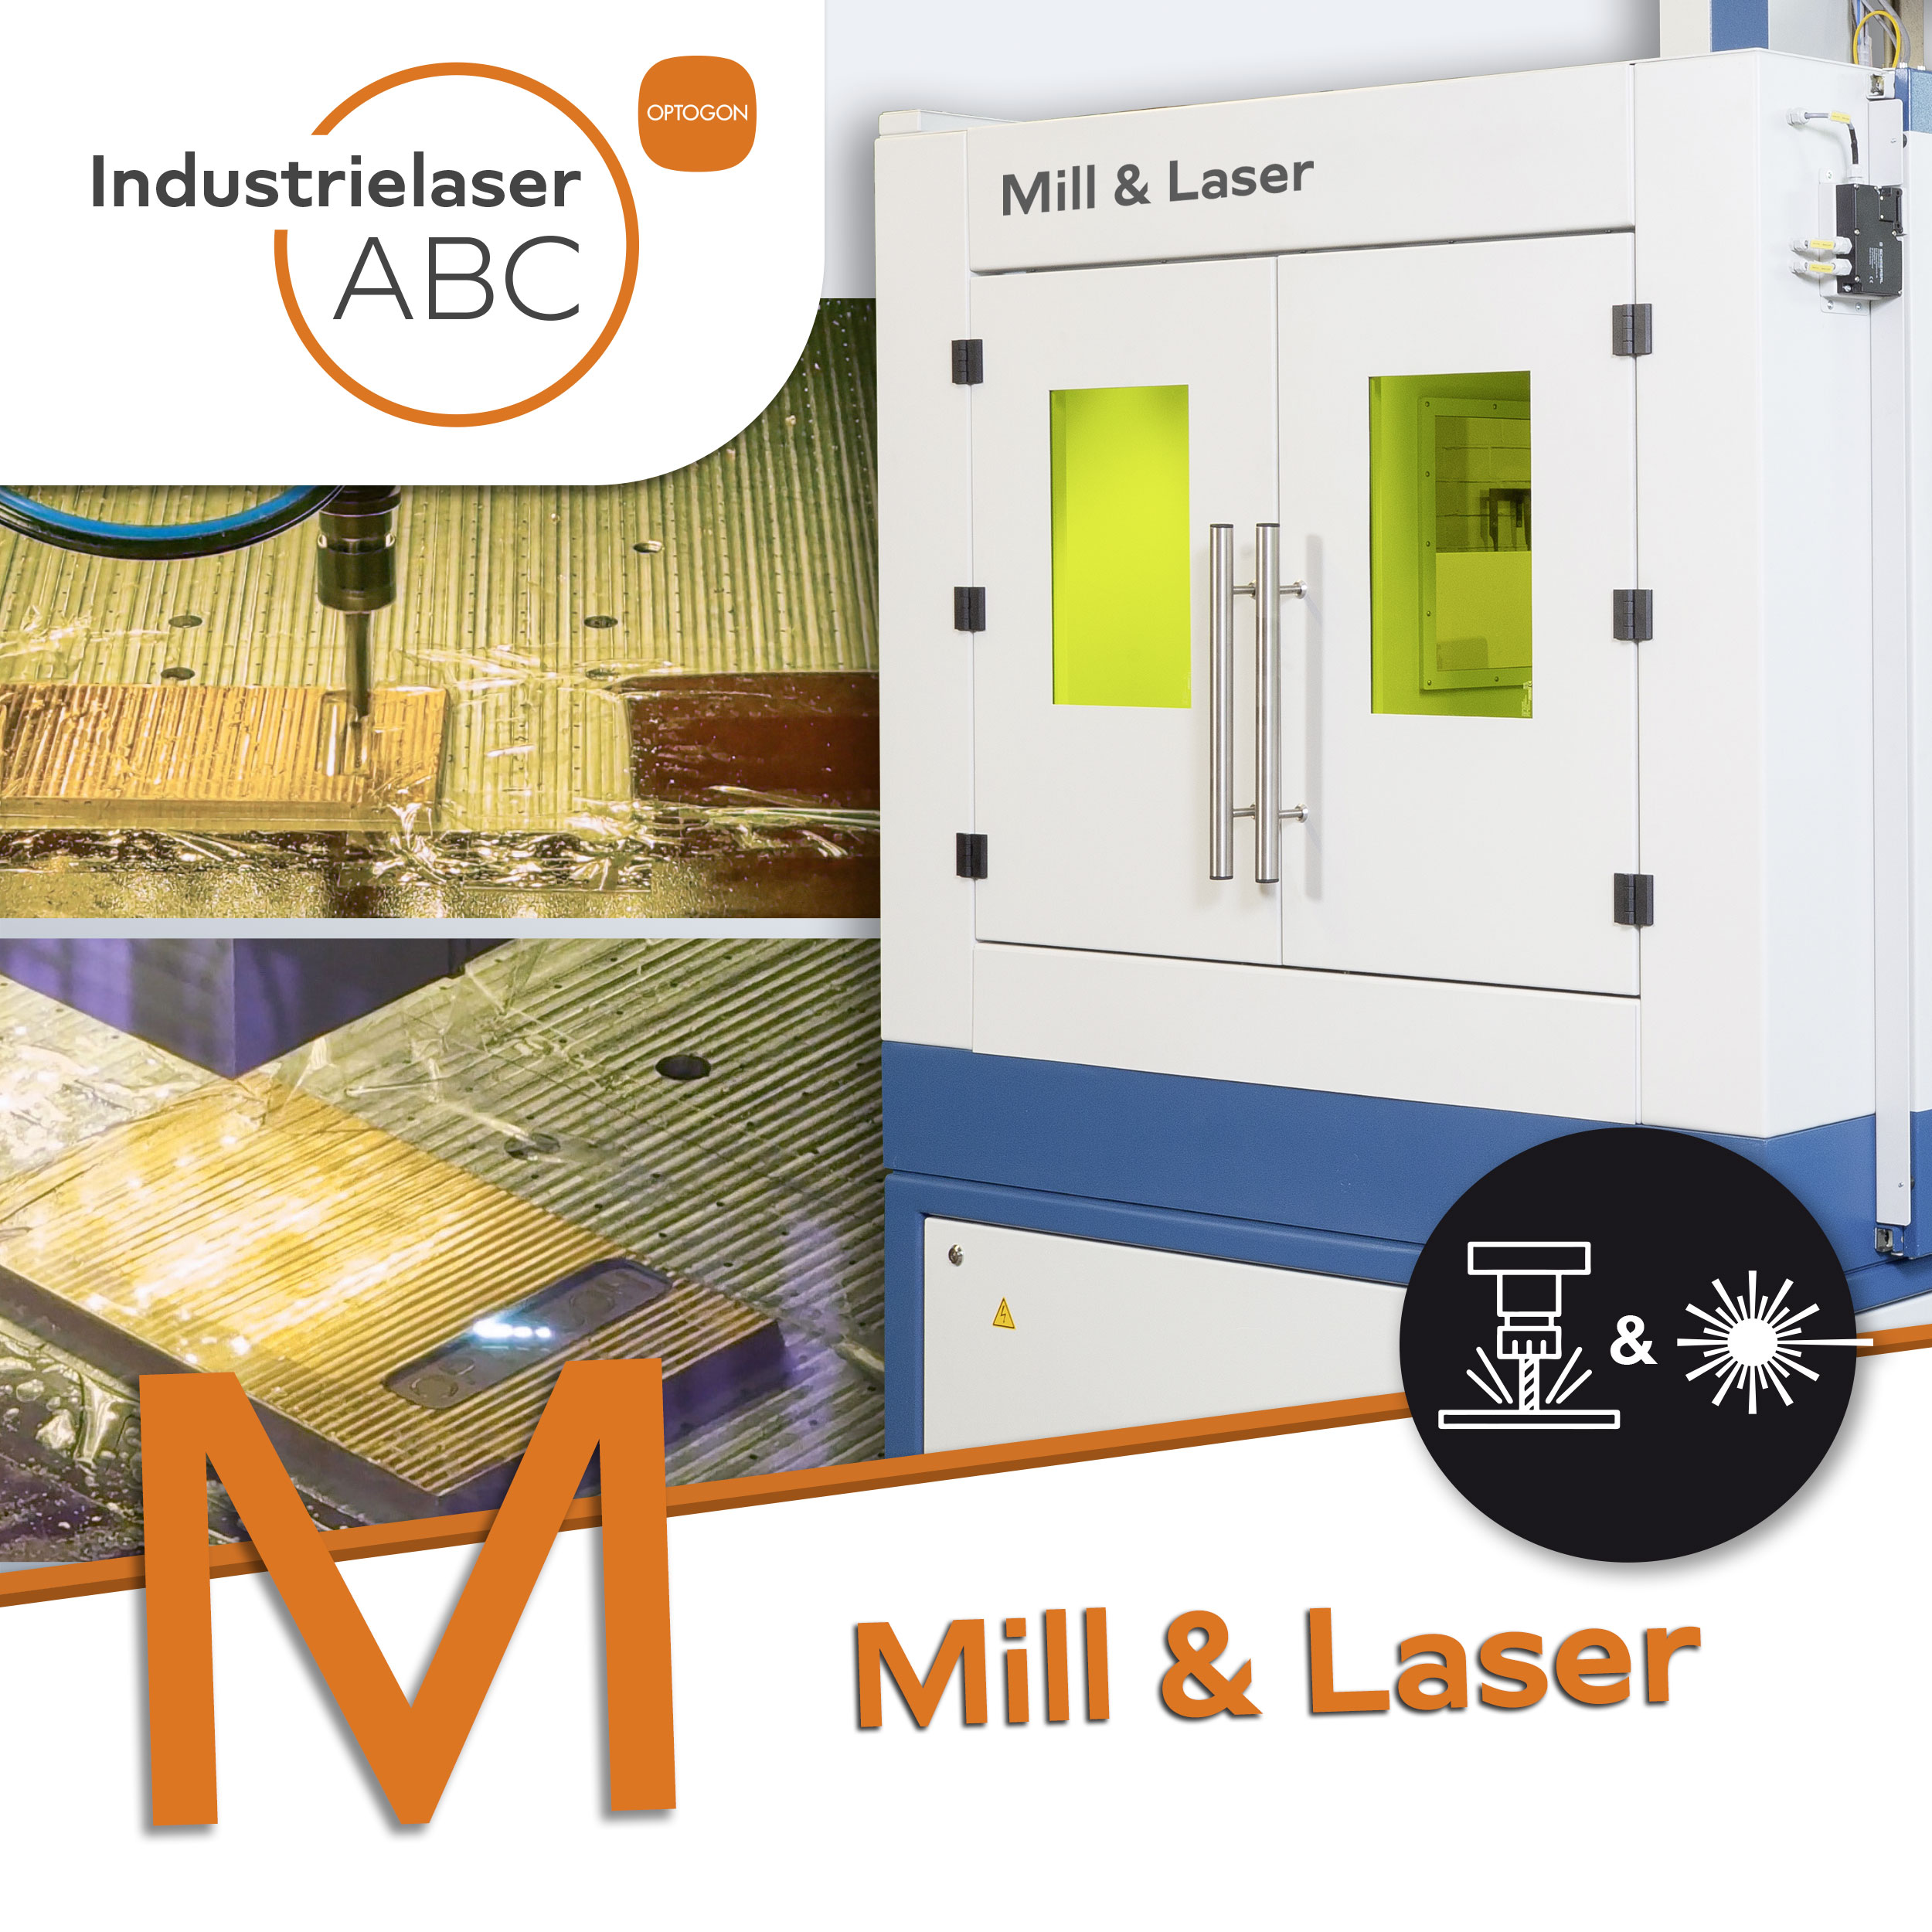 Industrielaser Mill & Laser